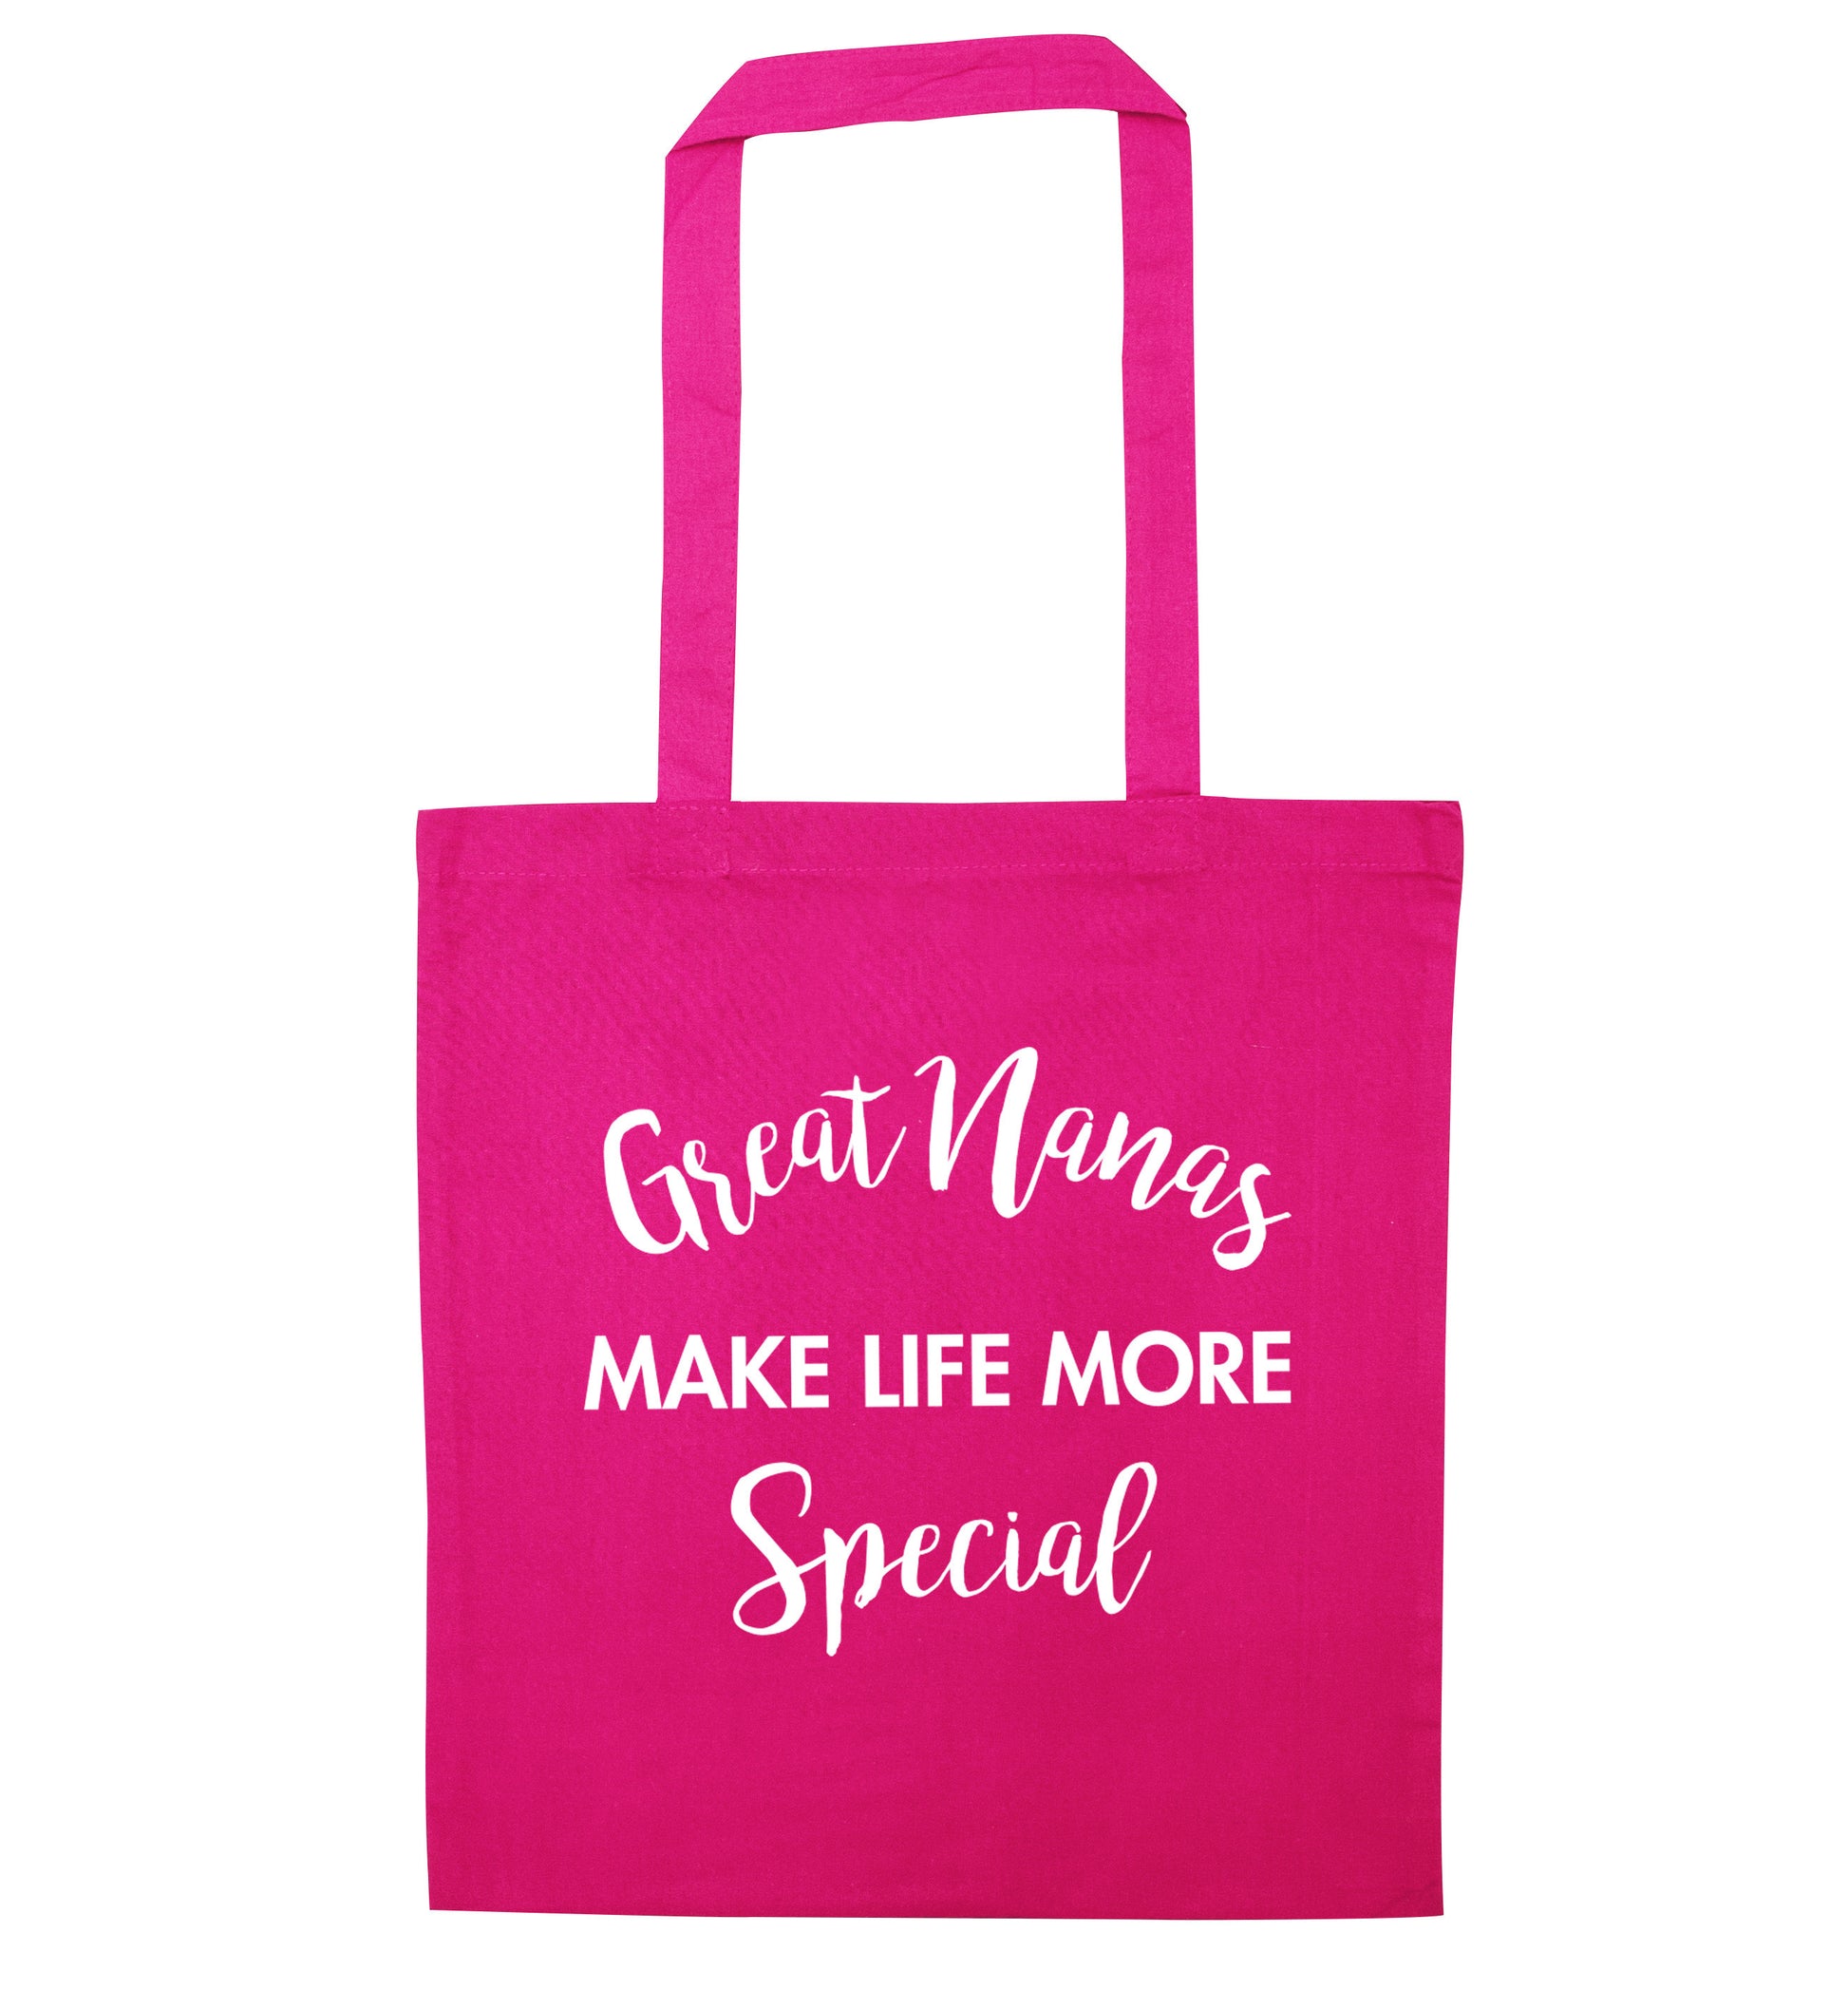 Great nanas make life more special pink tote bag